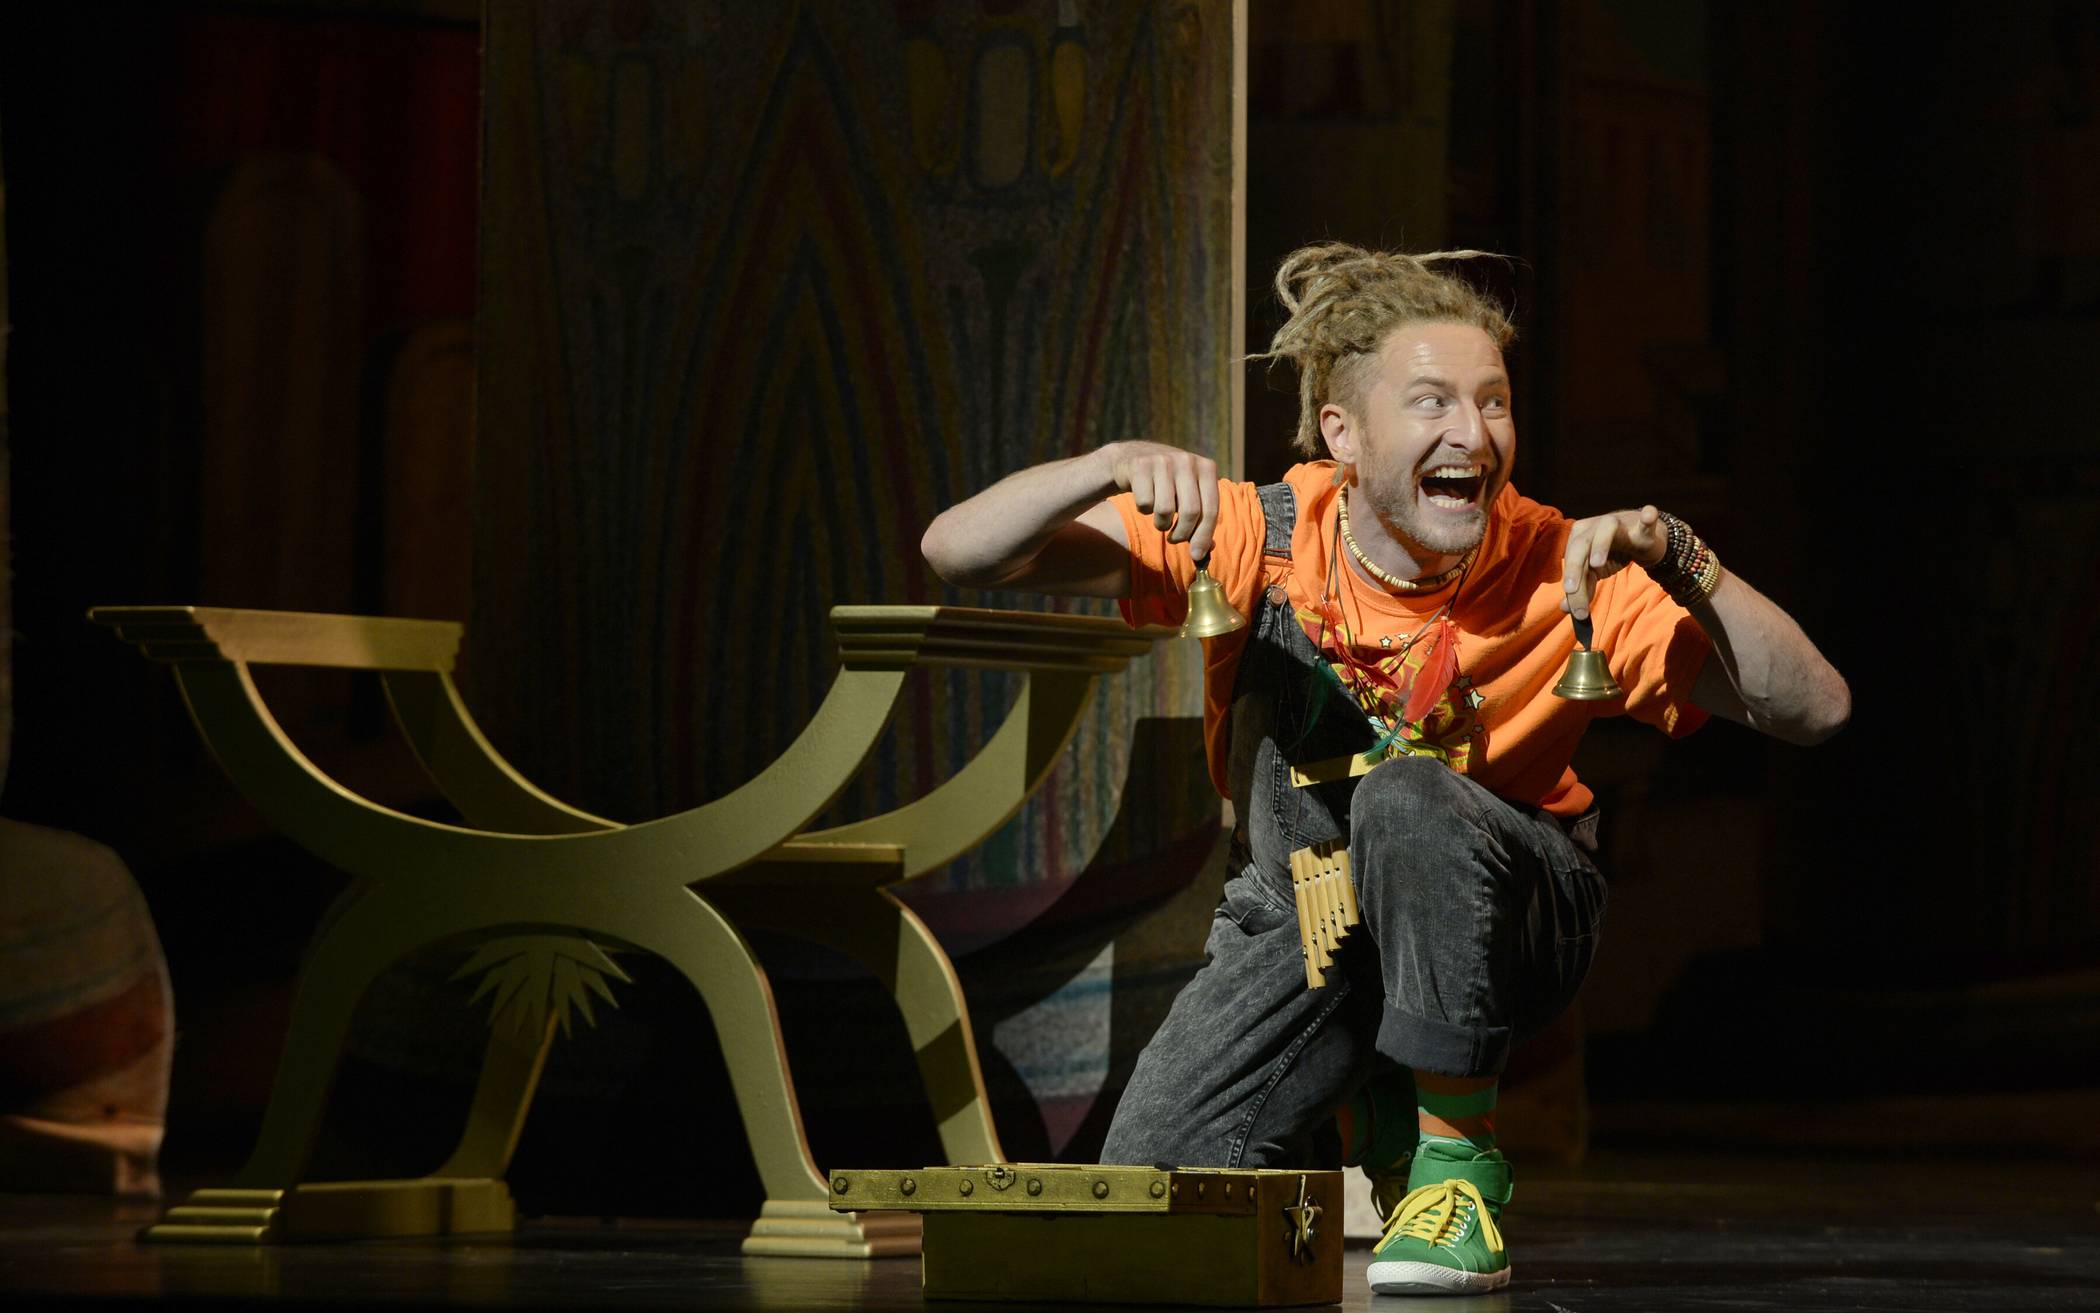  Ein echter Publikumsliebling: Simon Stricker als Dreadlock-Papageno in der Wuppertaler „Zauberflöte“. 